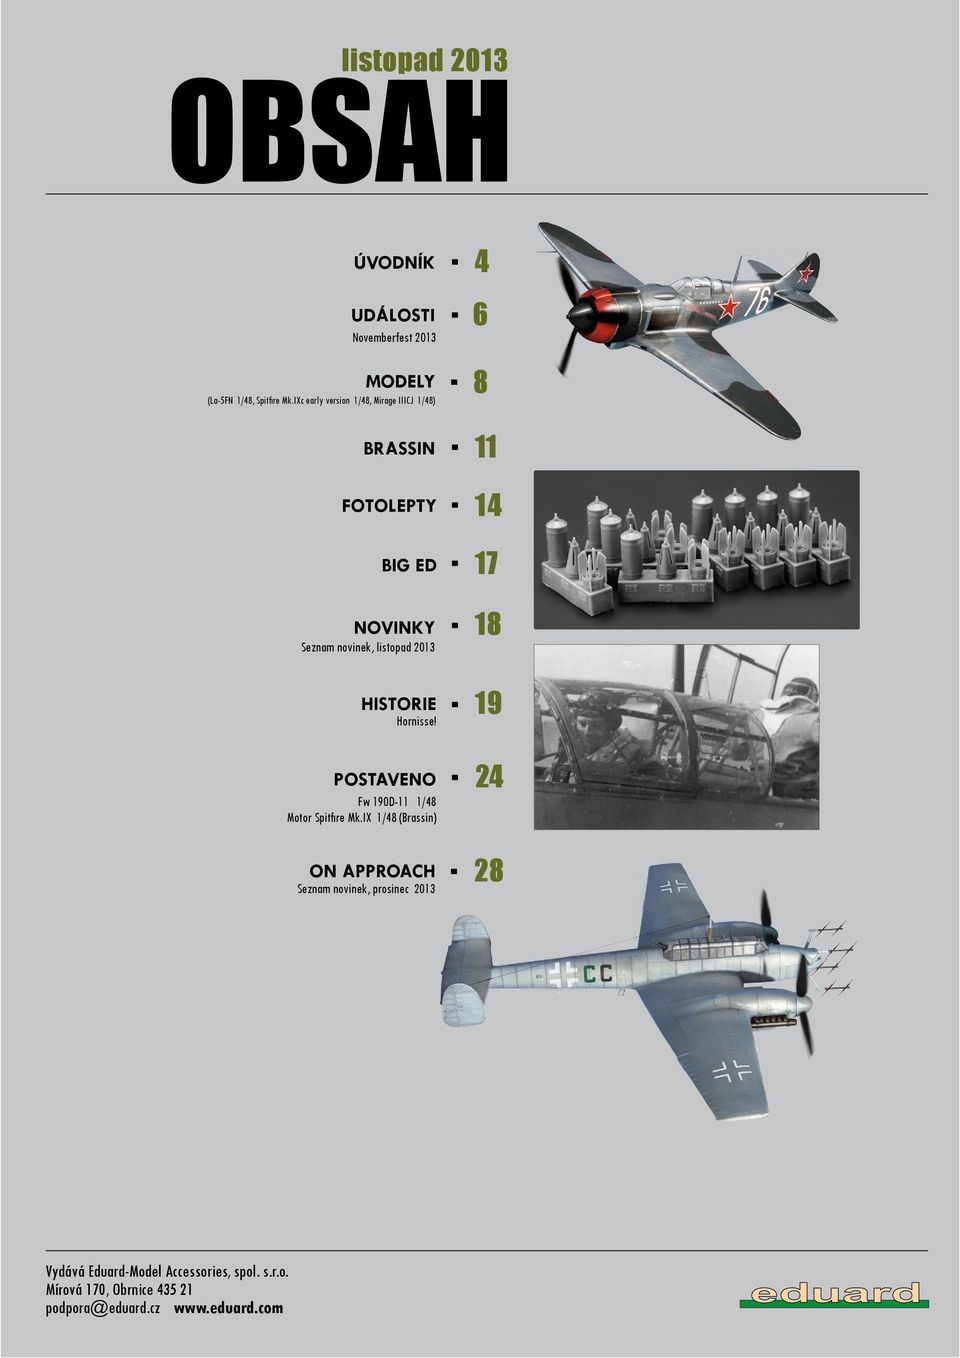 HISTORIE Hornisse! POSTAVENO Fw 190D-11 1/48 Motor Spitfire Mk.